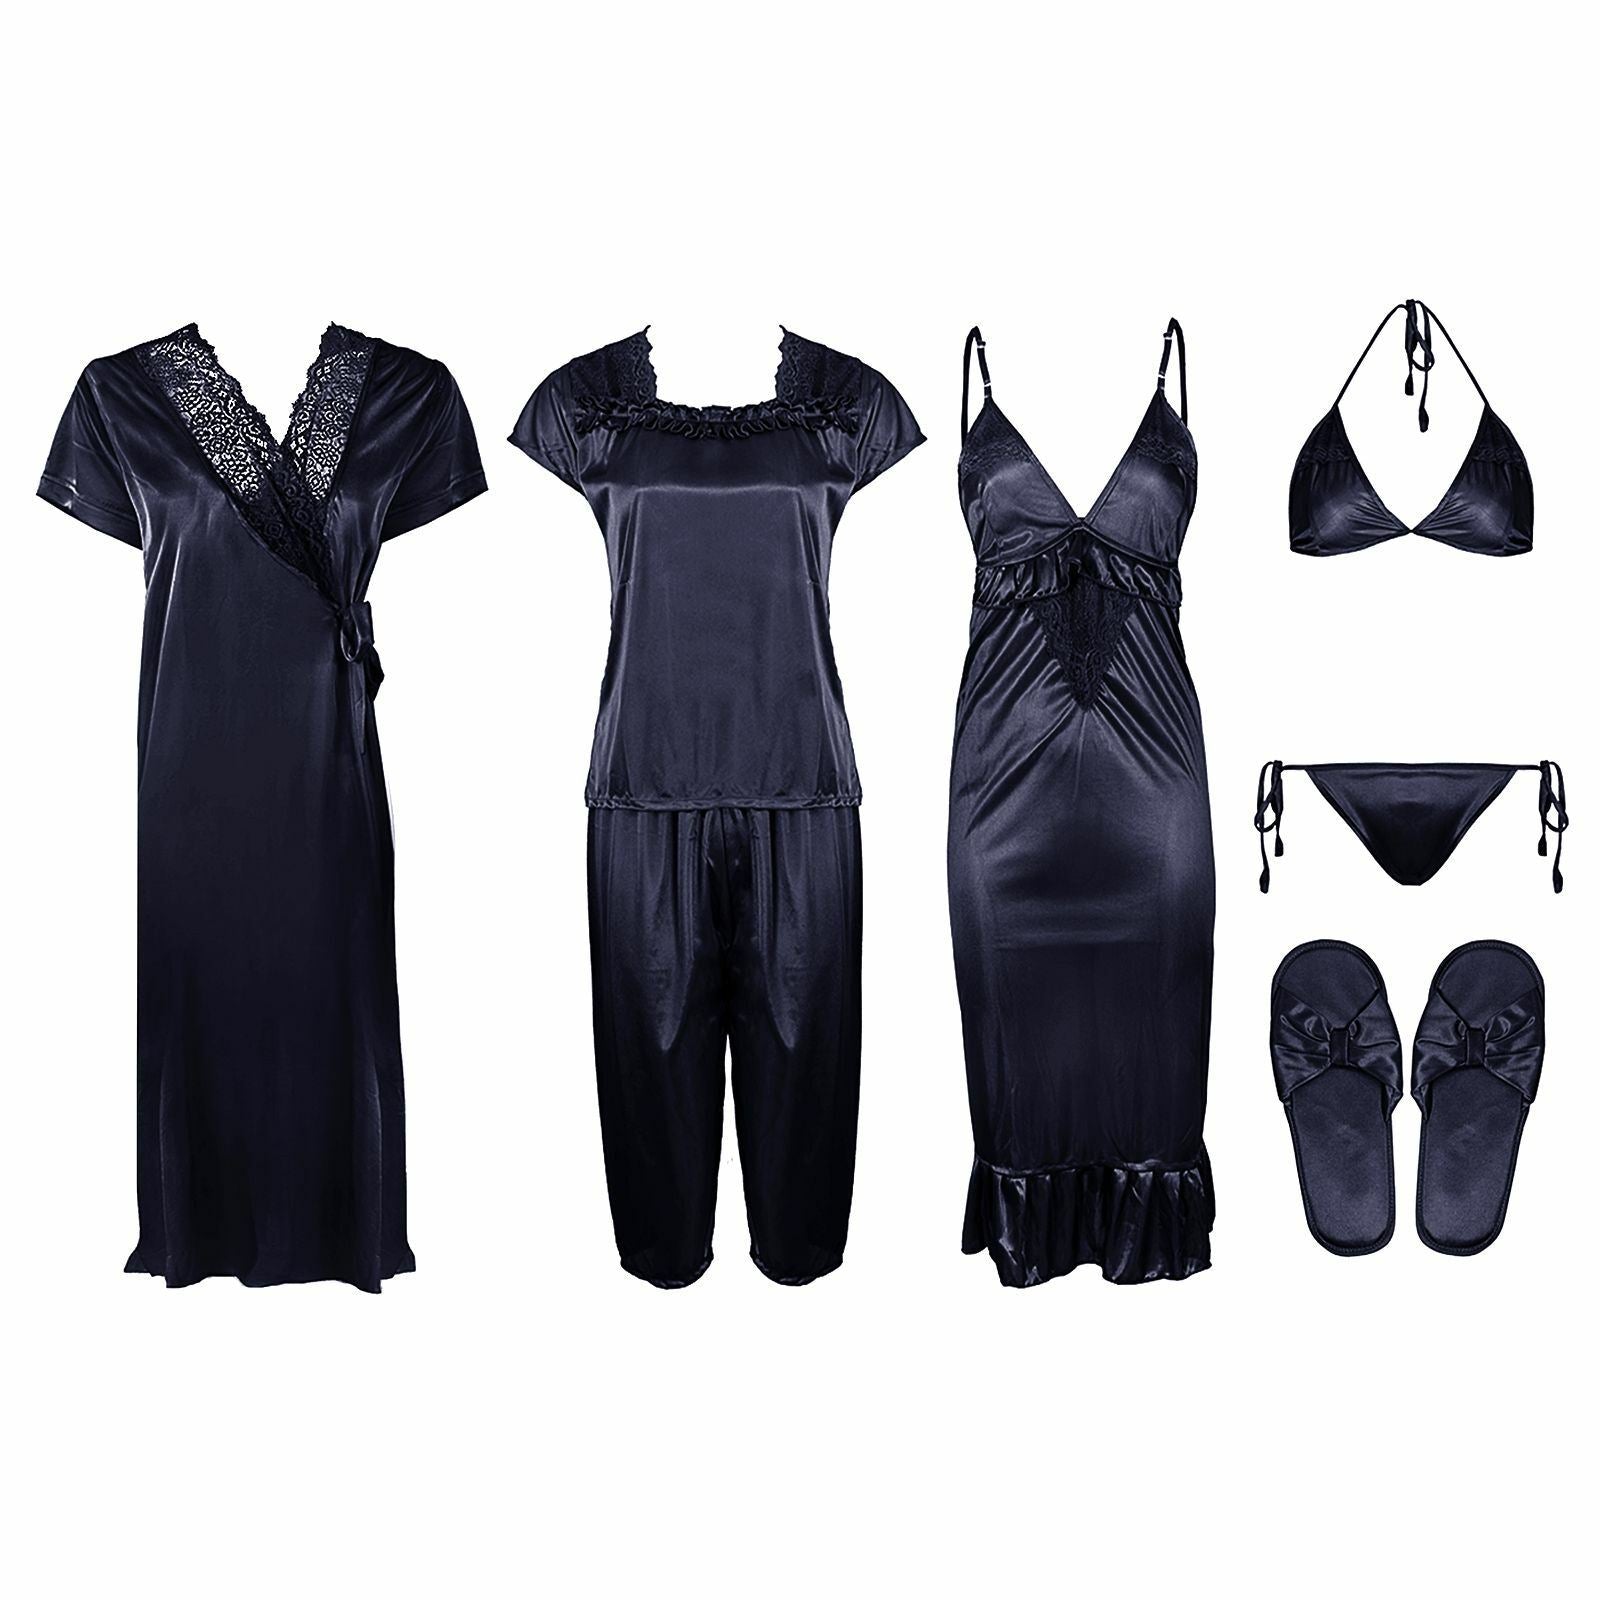 Navy 1 / One Size Ladies Satin Nightwear Set / Pyjama Set The Orange Tags